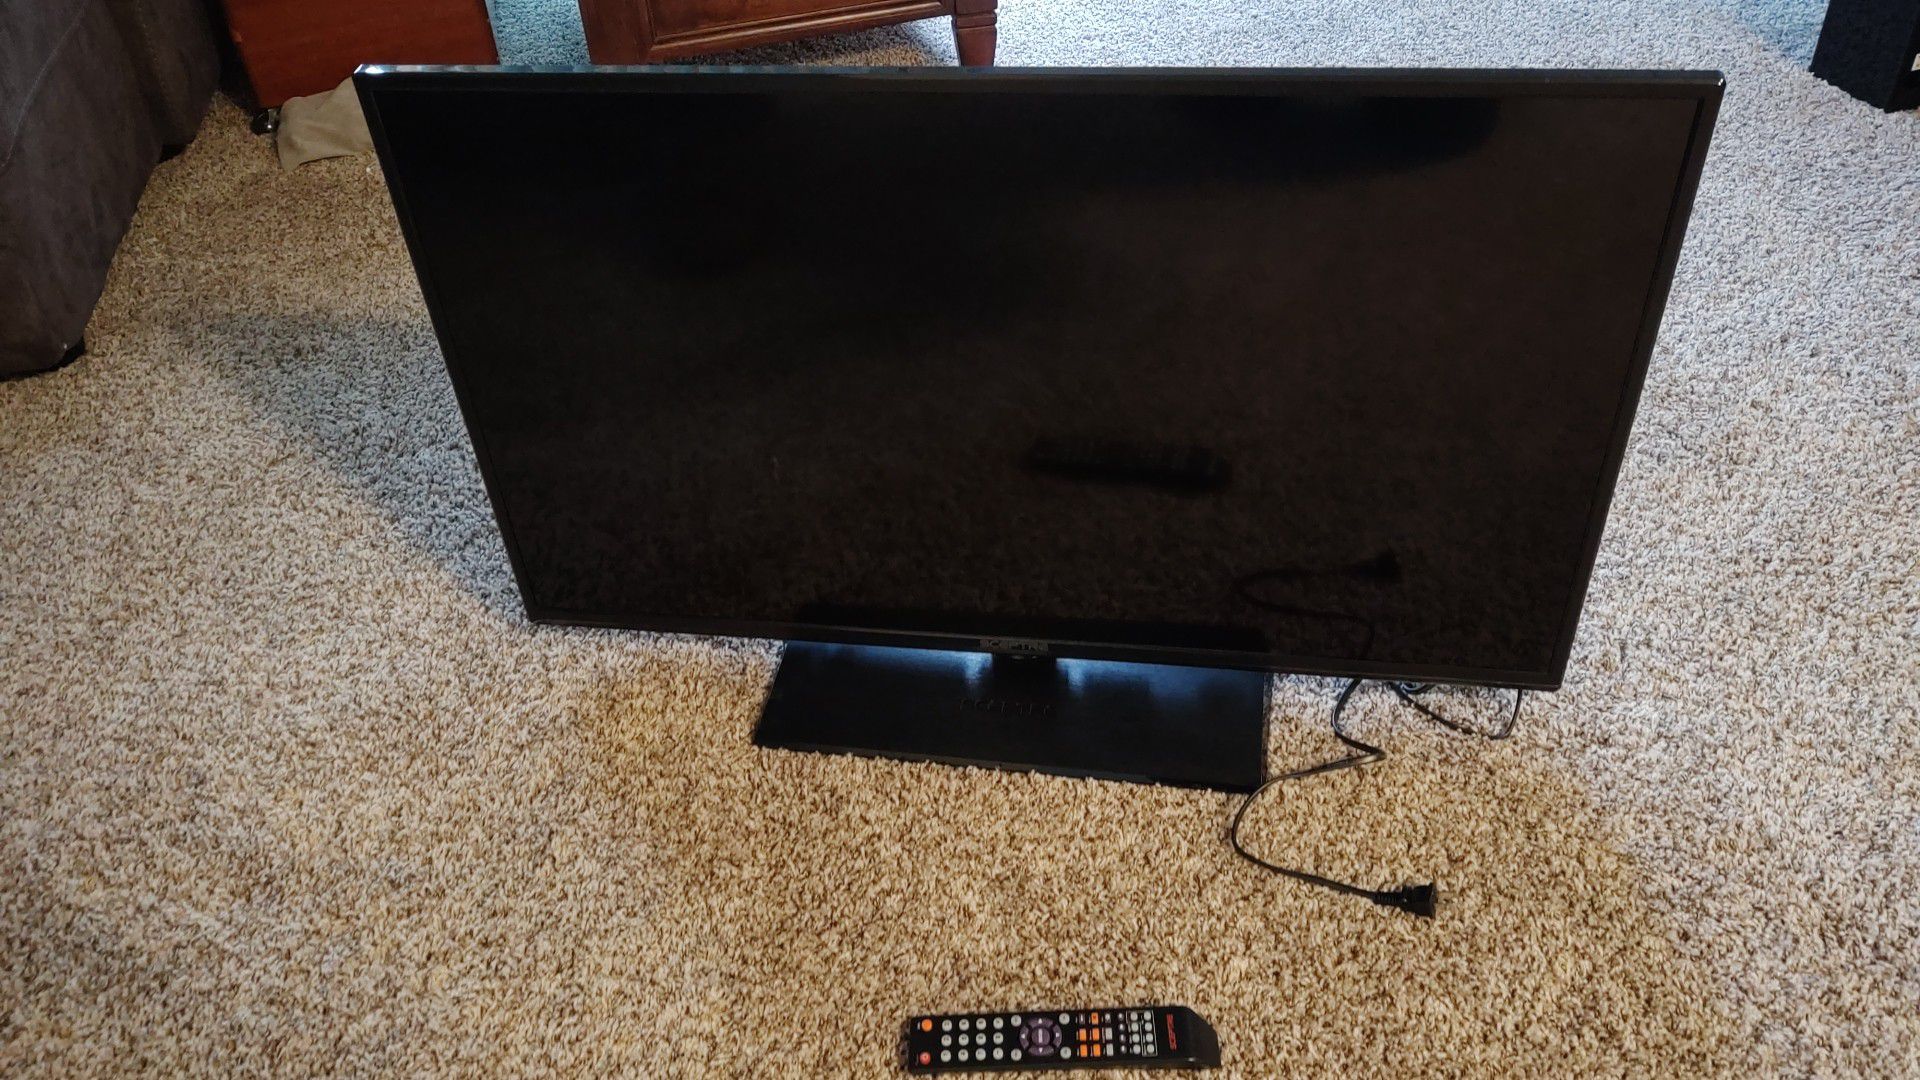 40 inch Sceptre tv